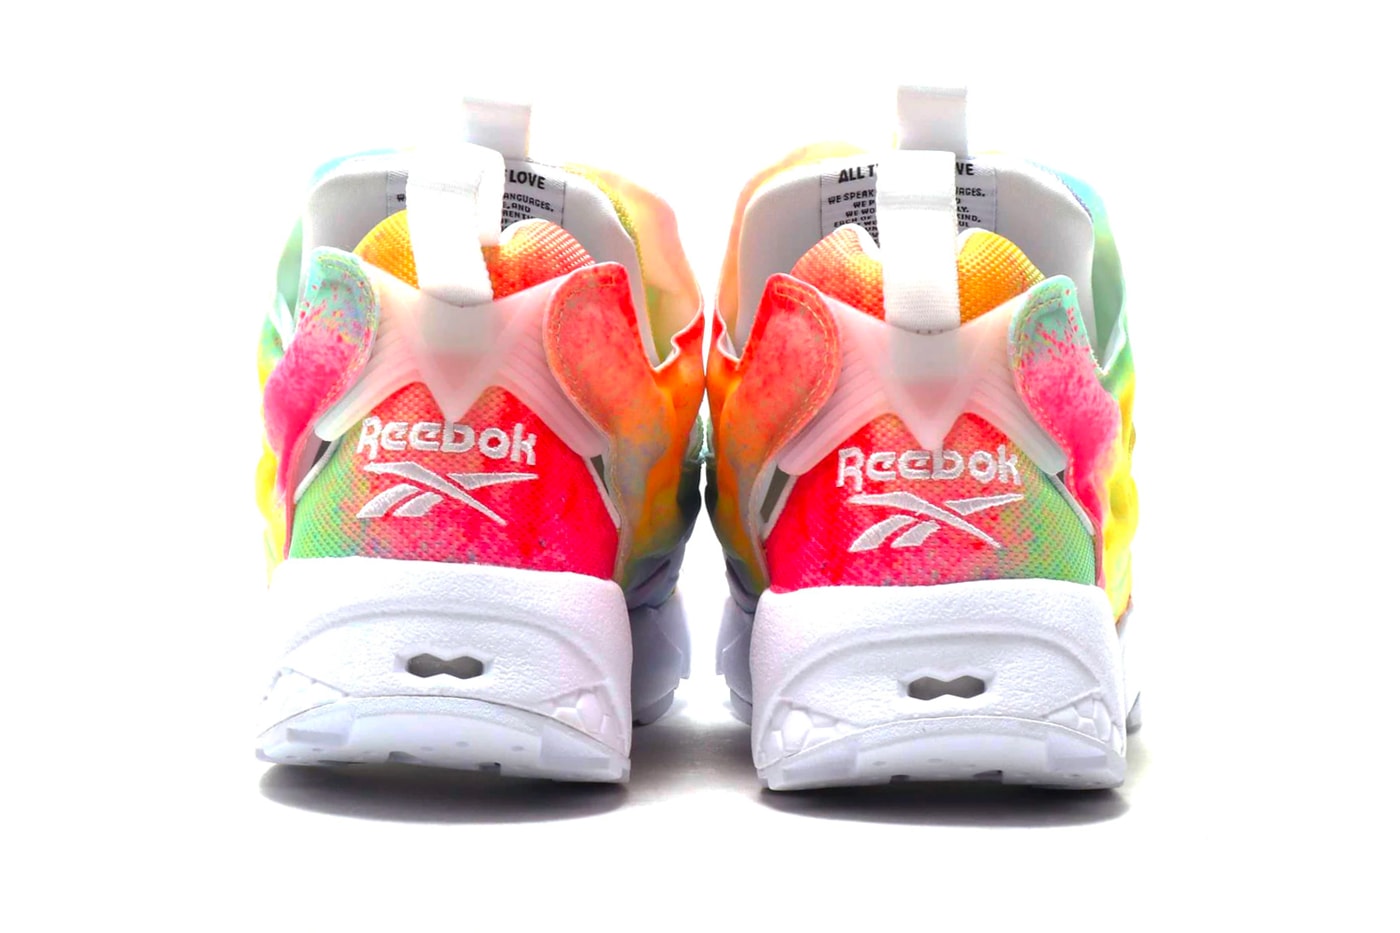 Reebok Instapump Fury OG Porcelain fx4775 menswear streetwear sneakers footwear shoes kicks trainers runners spring summer 2020 collection